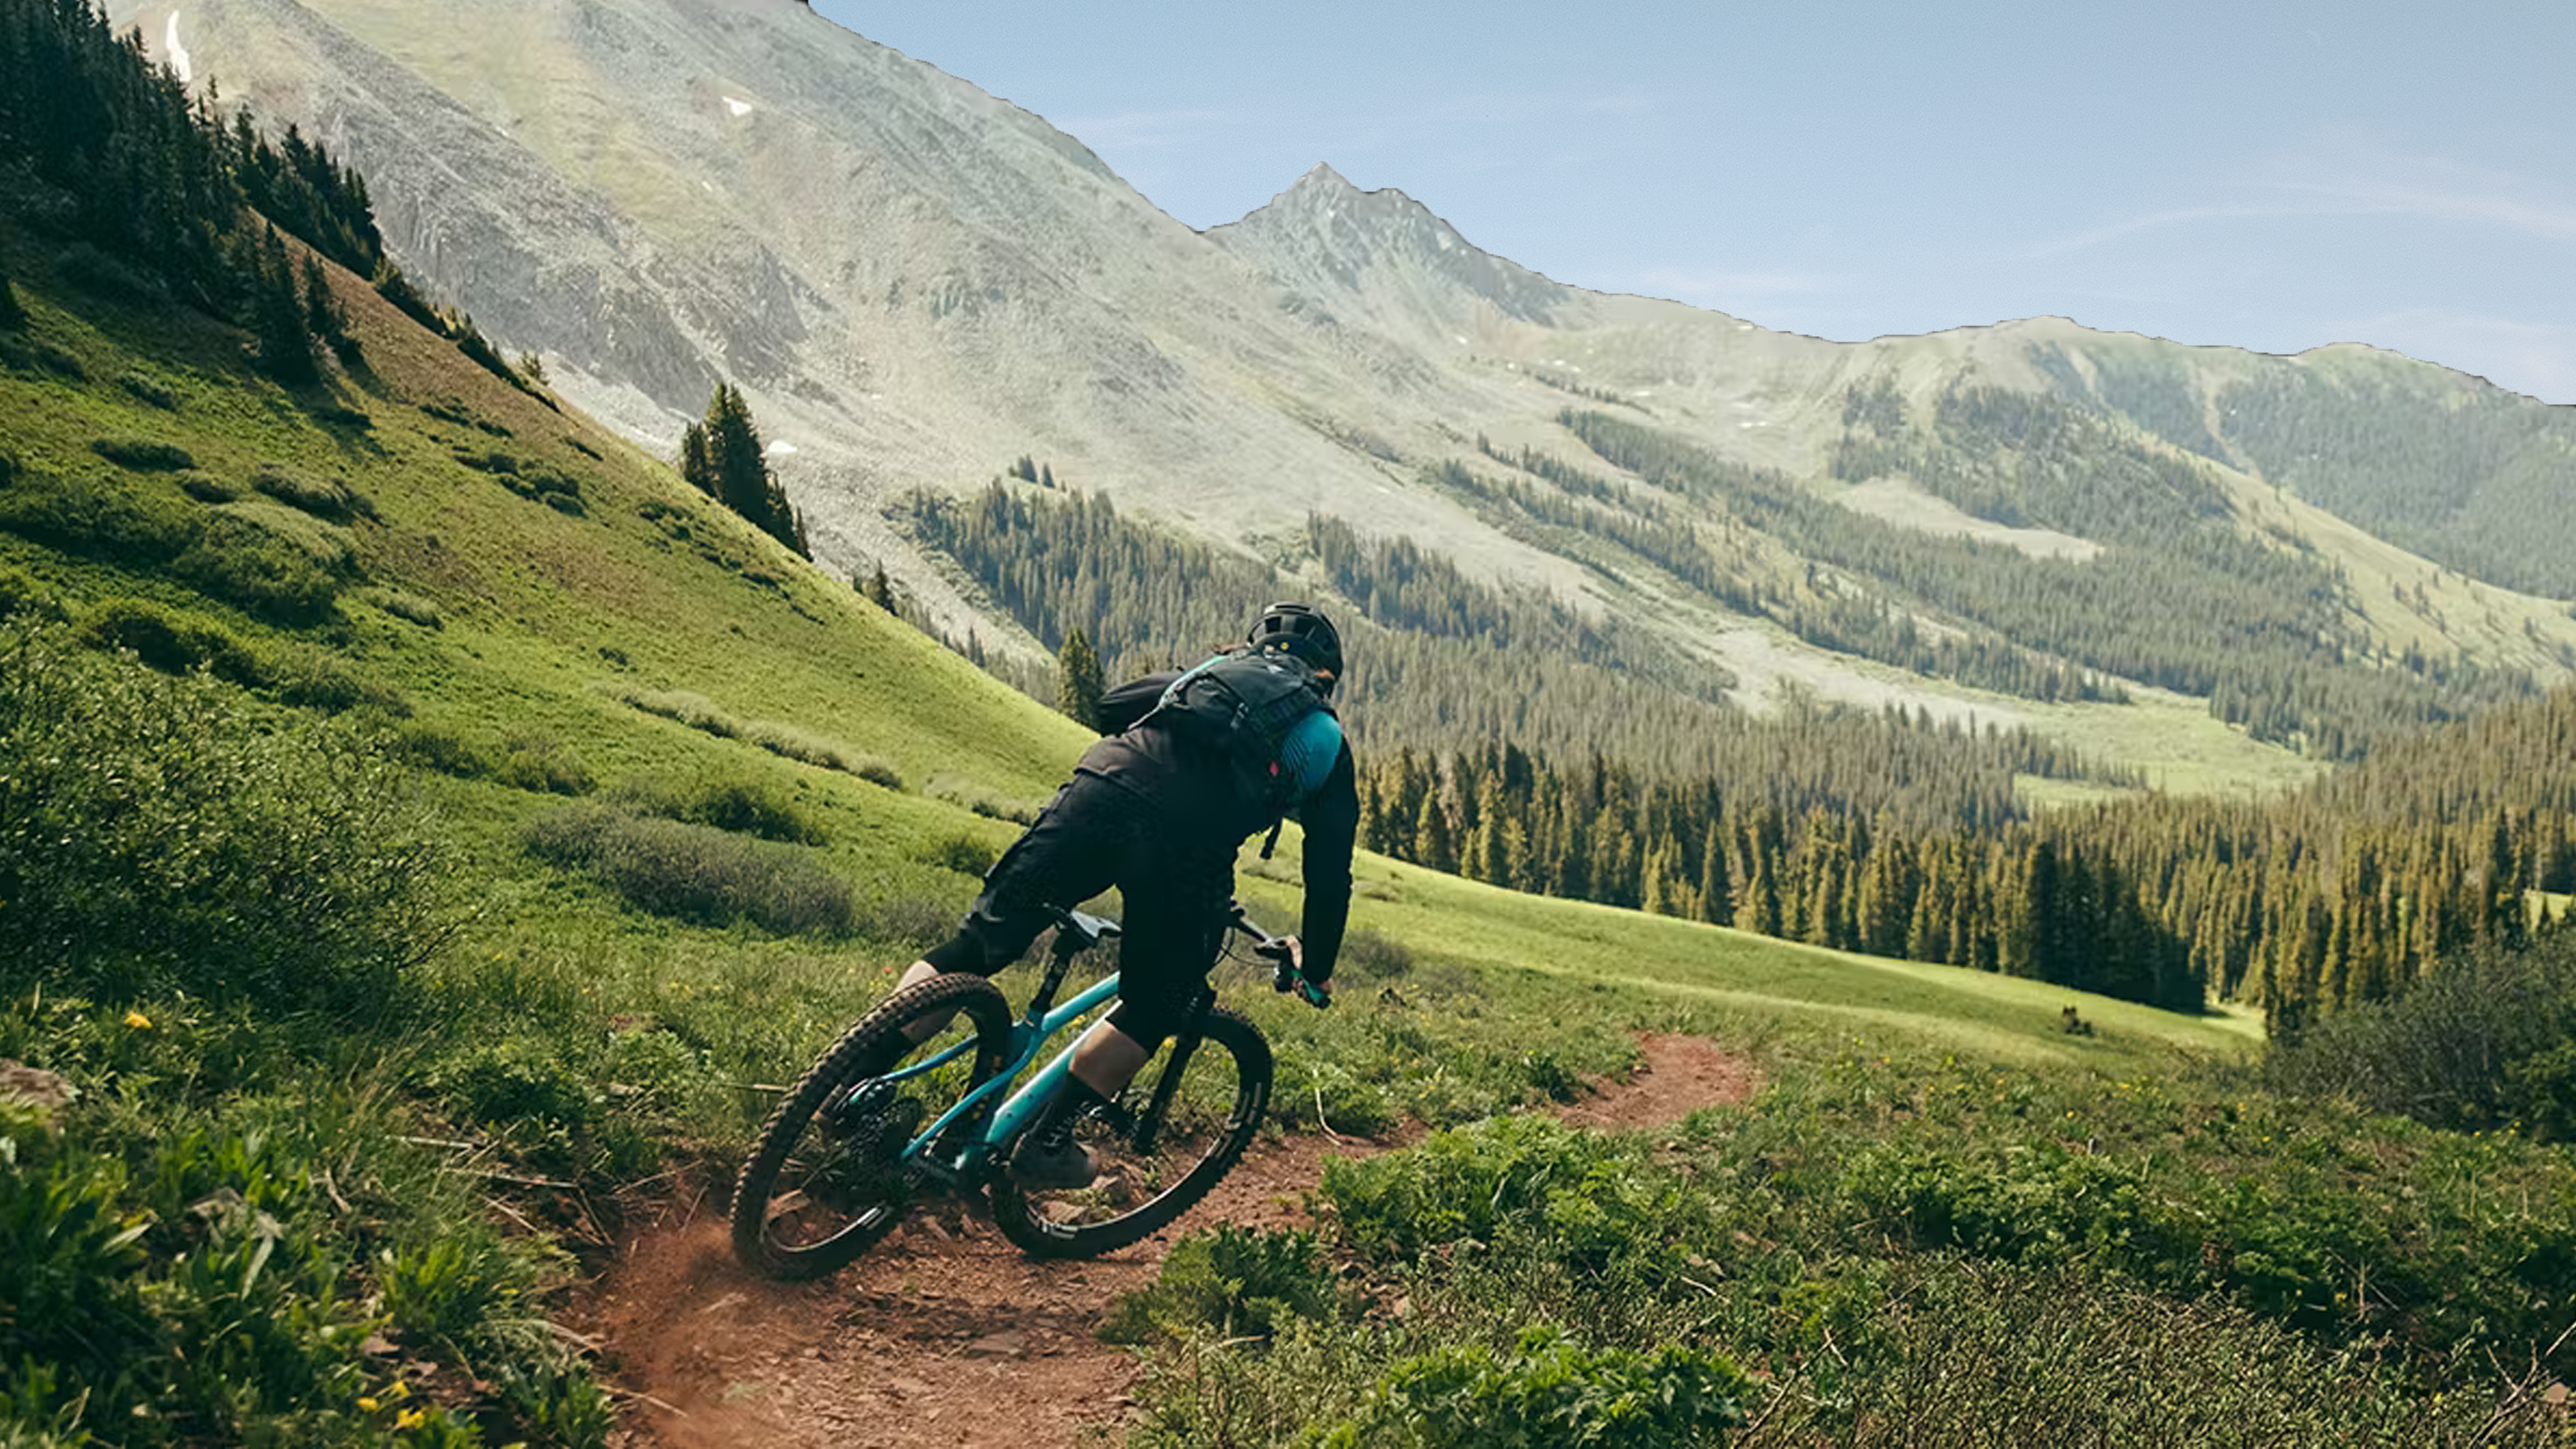 Yeti Arc Hardtail Mountain Bike in an alpine setting